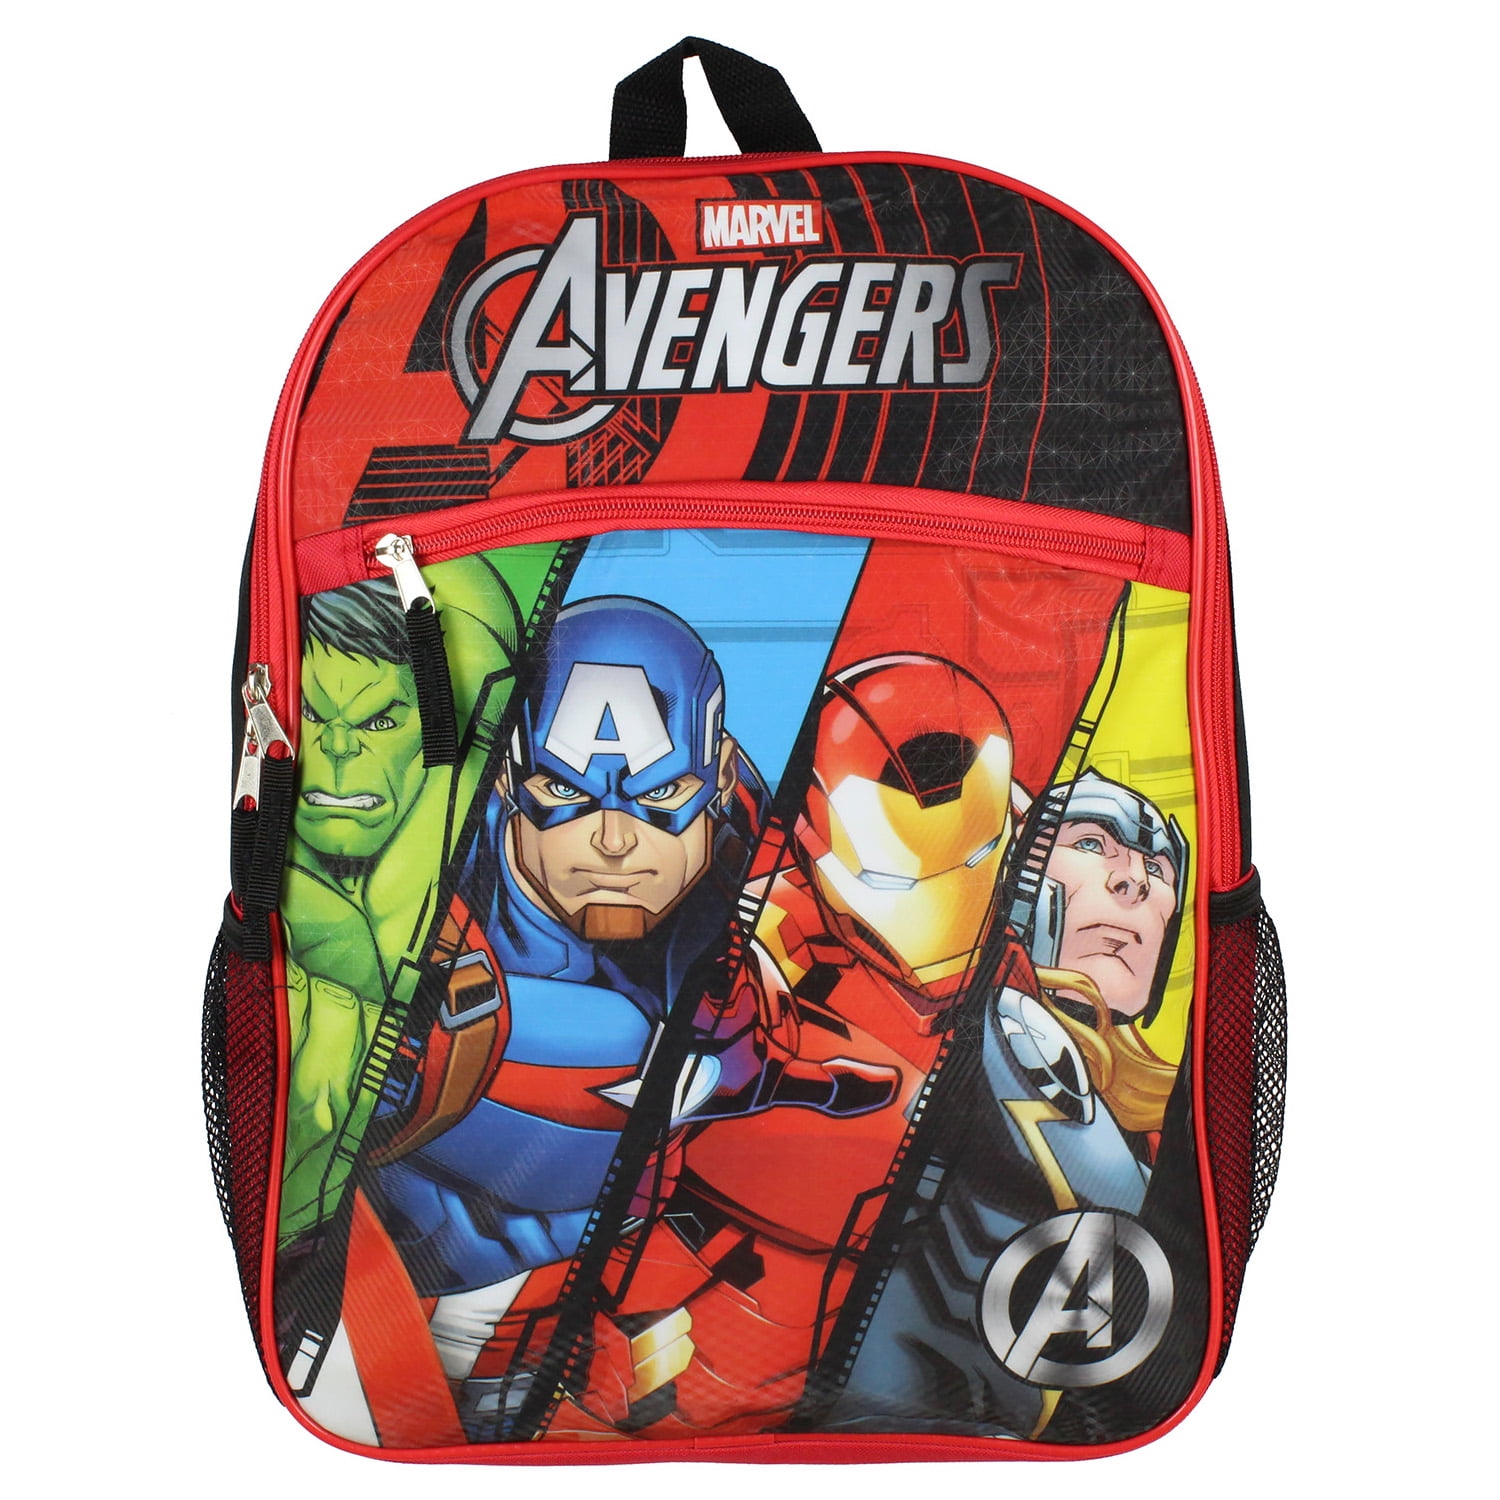 Captain Marvel Licensed Backpack Avengers Laptop Slouch Backpack New Tags 2019 